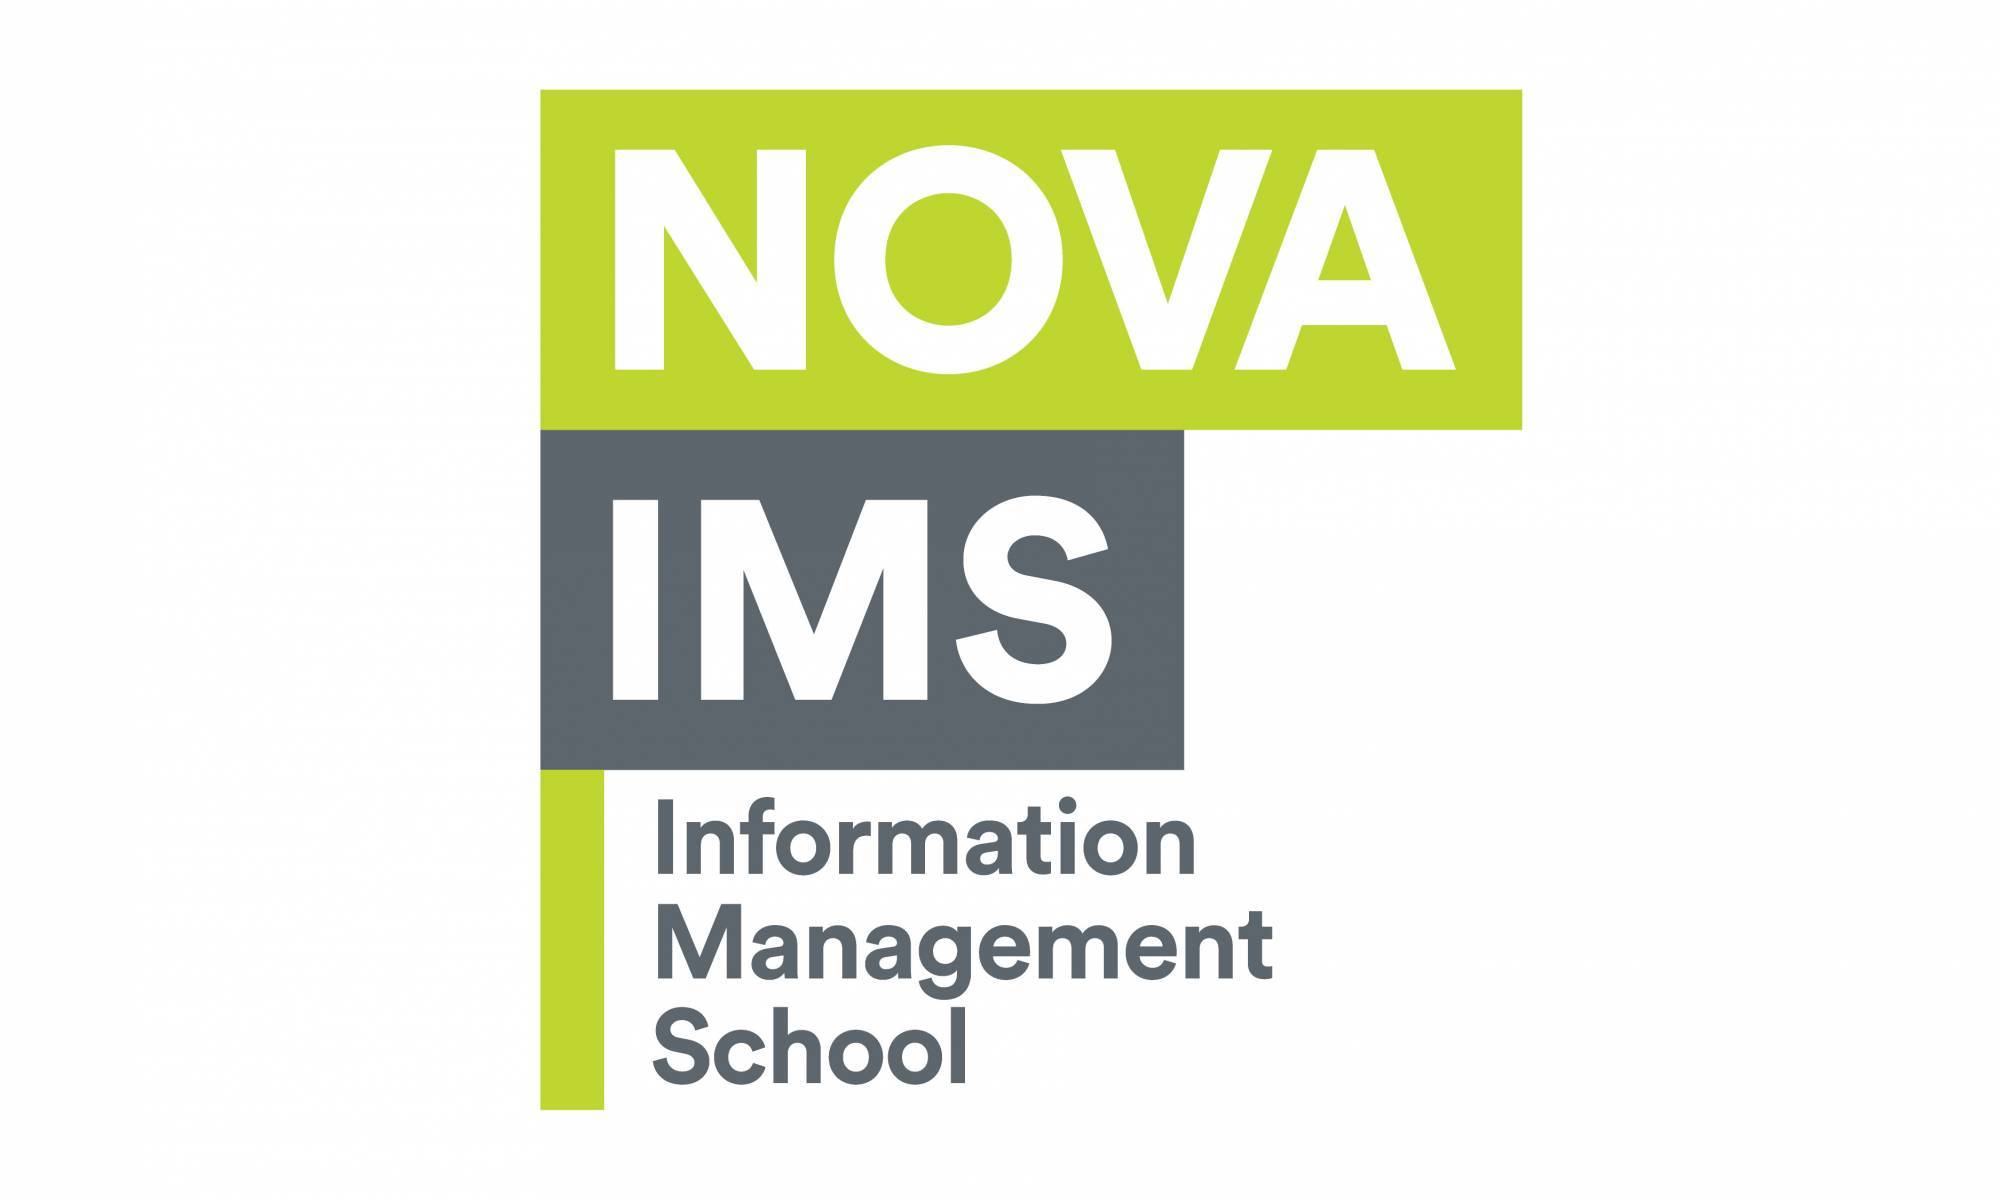 NOVA IMS Information Management School